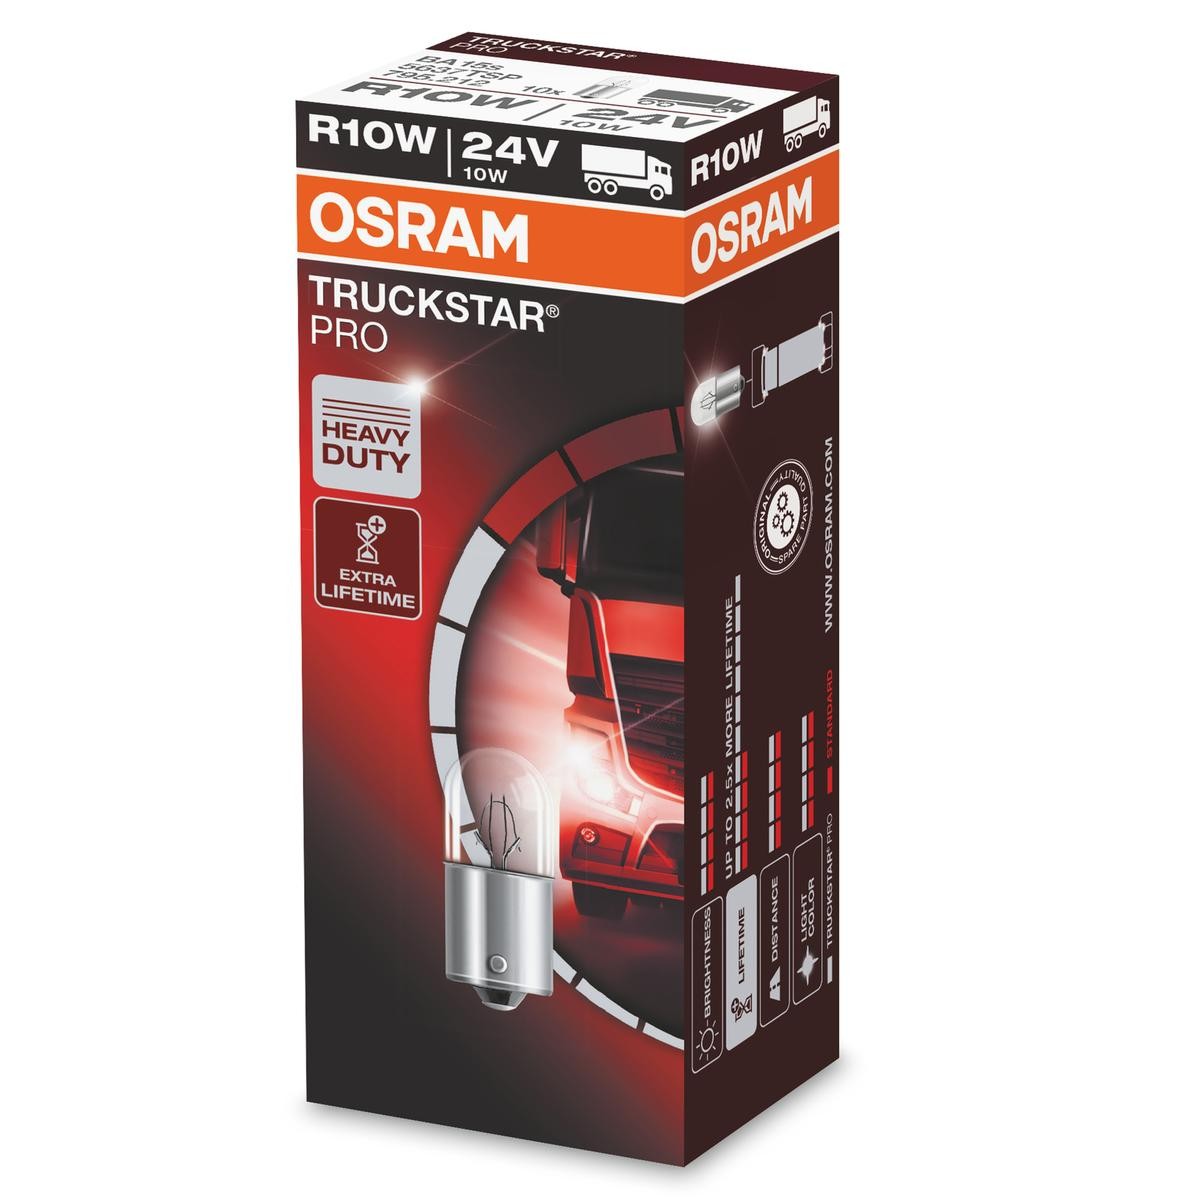 R10W OSRAM TRUCKSTAR PRO 24V 10W, R10W, BA15s Bulb, licence plate light 5637TSP buy